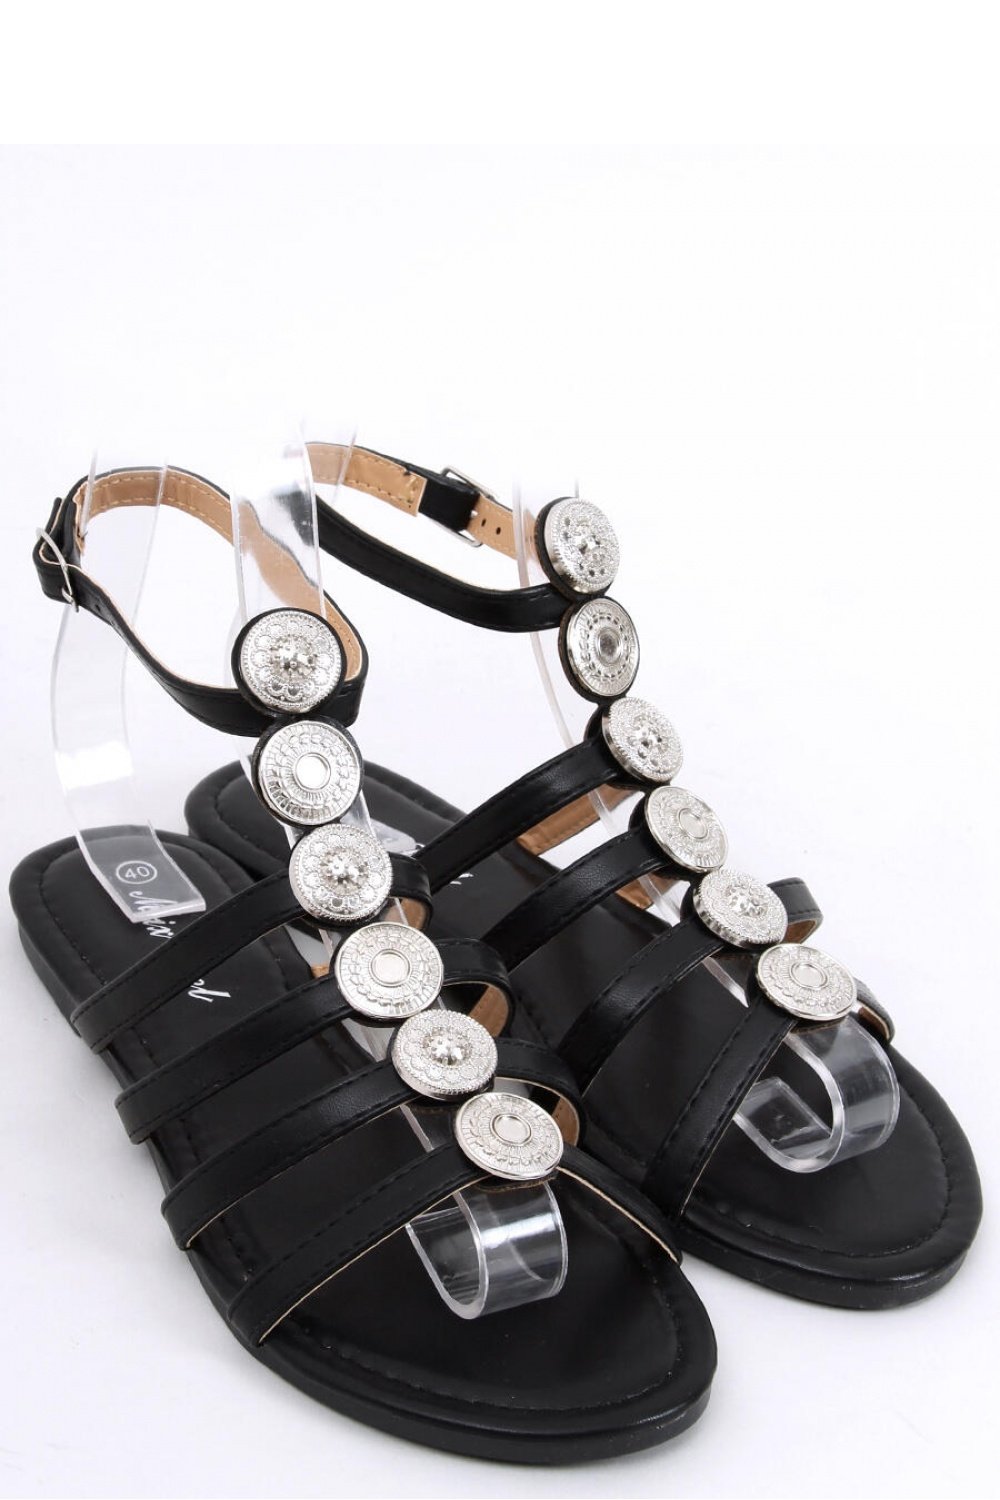 Sandals model 167280 Inello Posh Styles Apparel